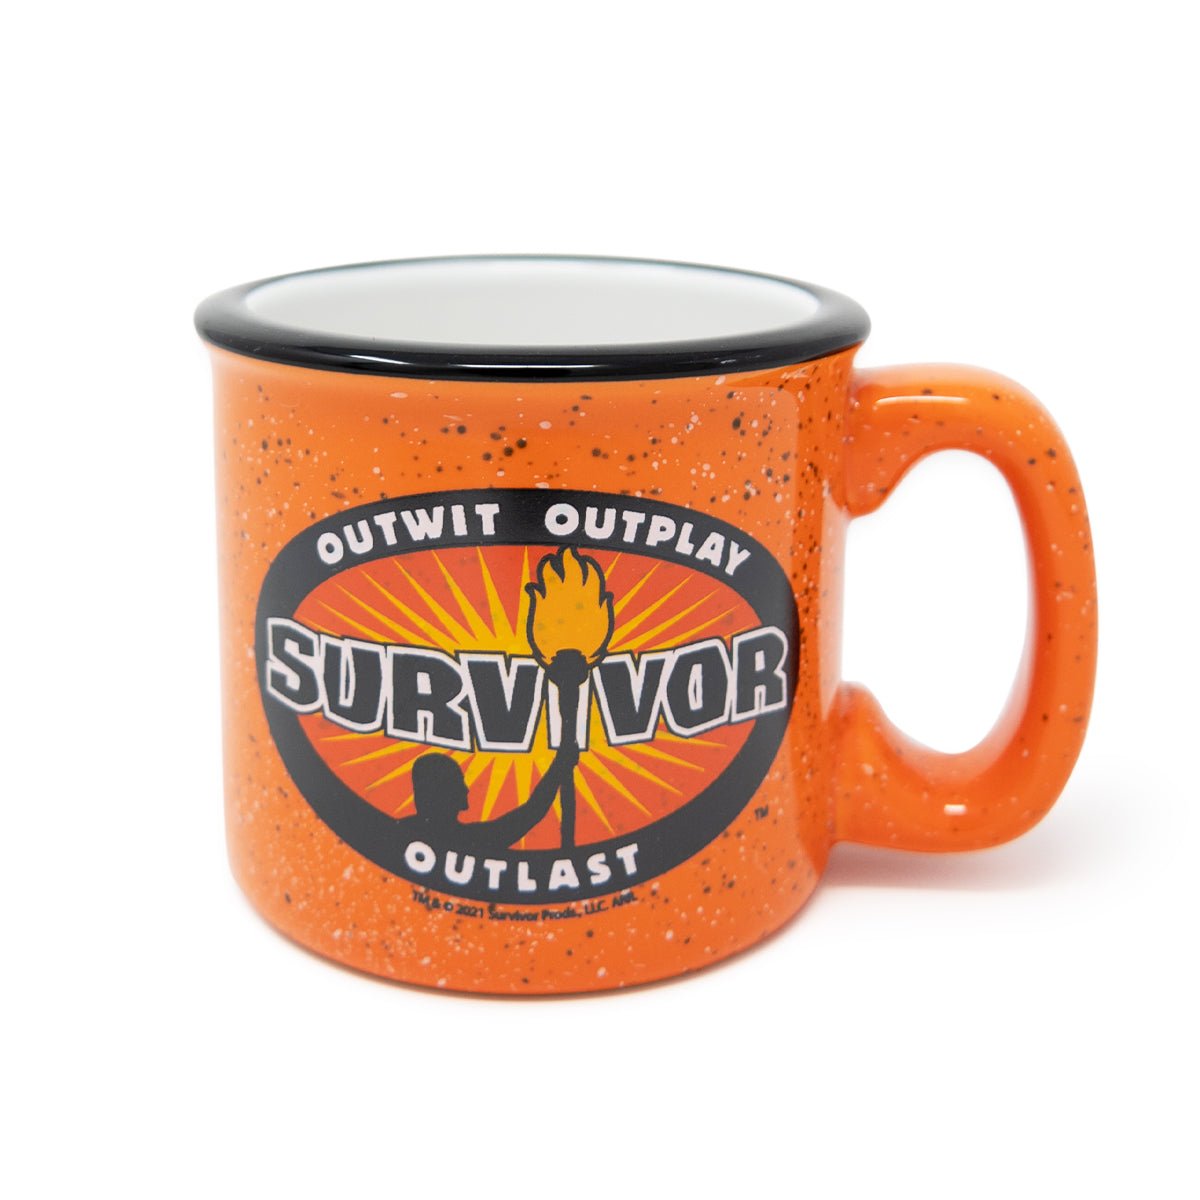 Survivor Outwit, Outplay, Outlast 15 oz Campfire Mug - Paramount Shop